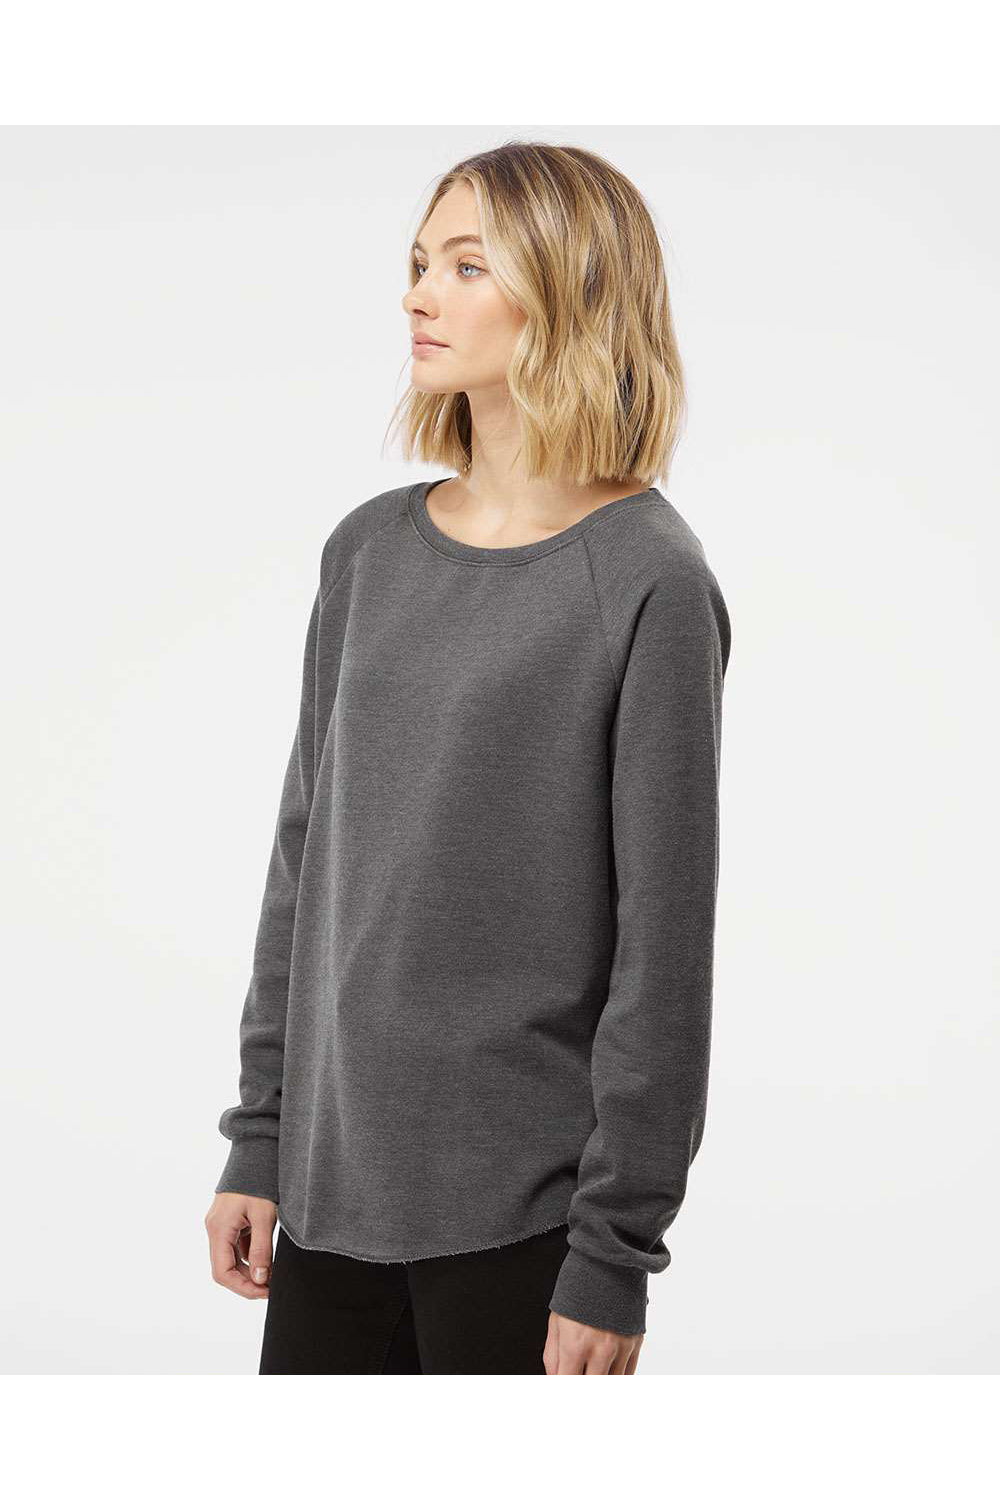 Independent Trading Co. PRM2000 Womens California Wave Wash Crewneck Sweatshirt Shadow Grey Model Side